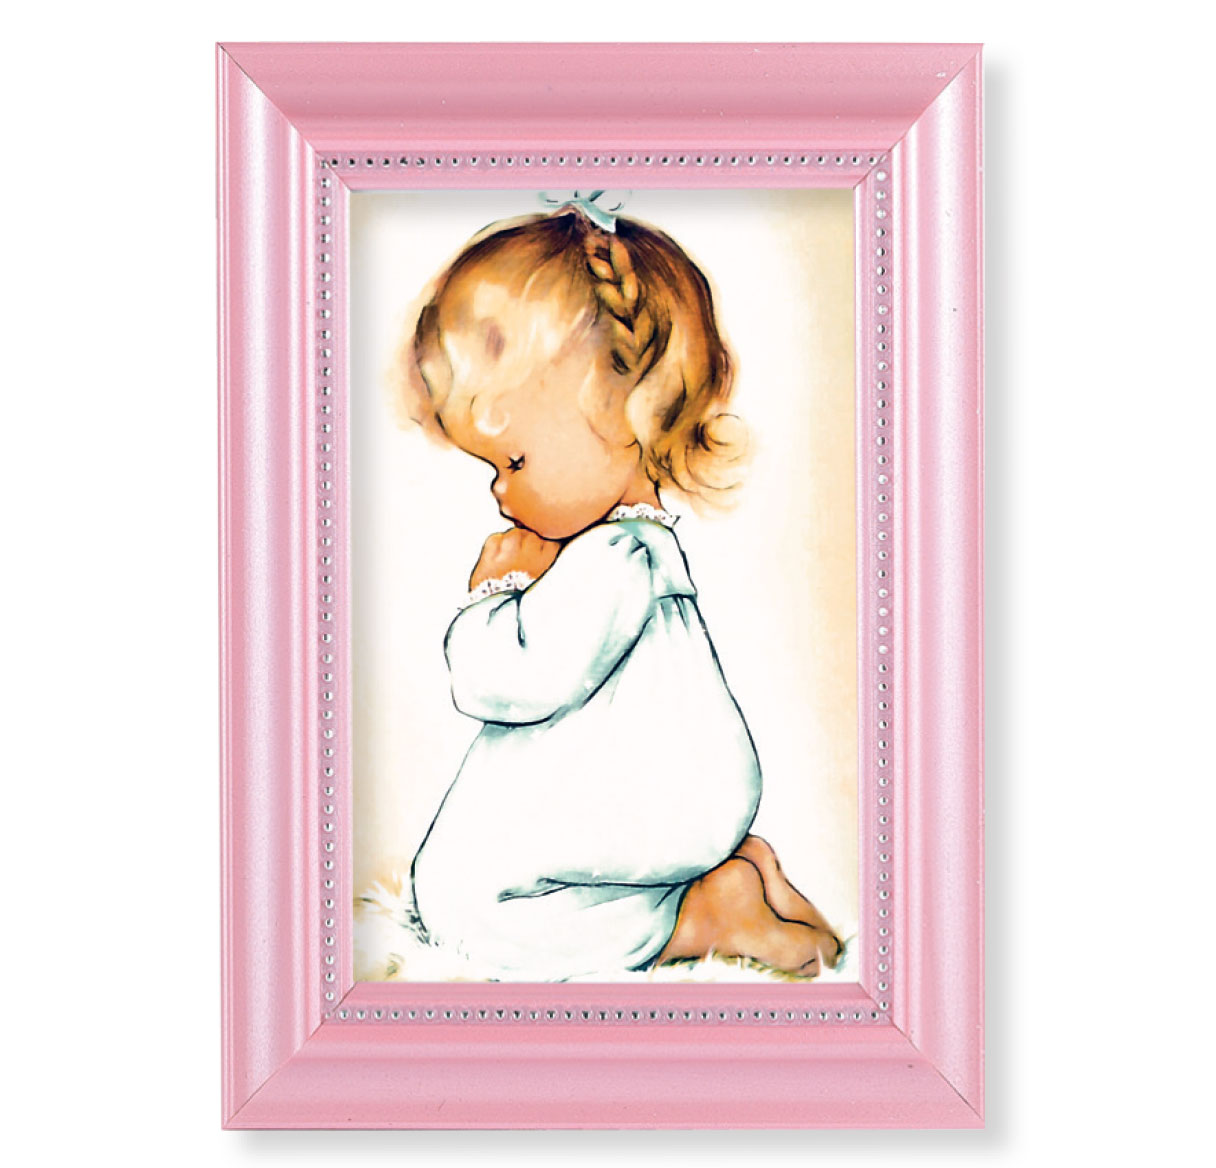 Print Praying Girl 4 x 6 inch Pearlized Pink Framed